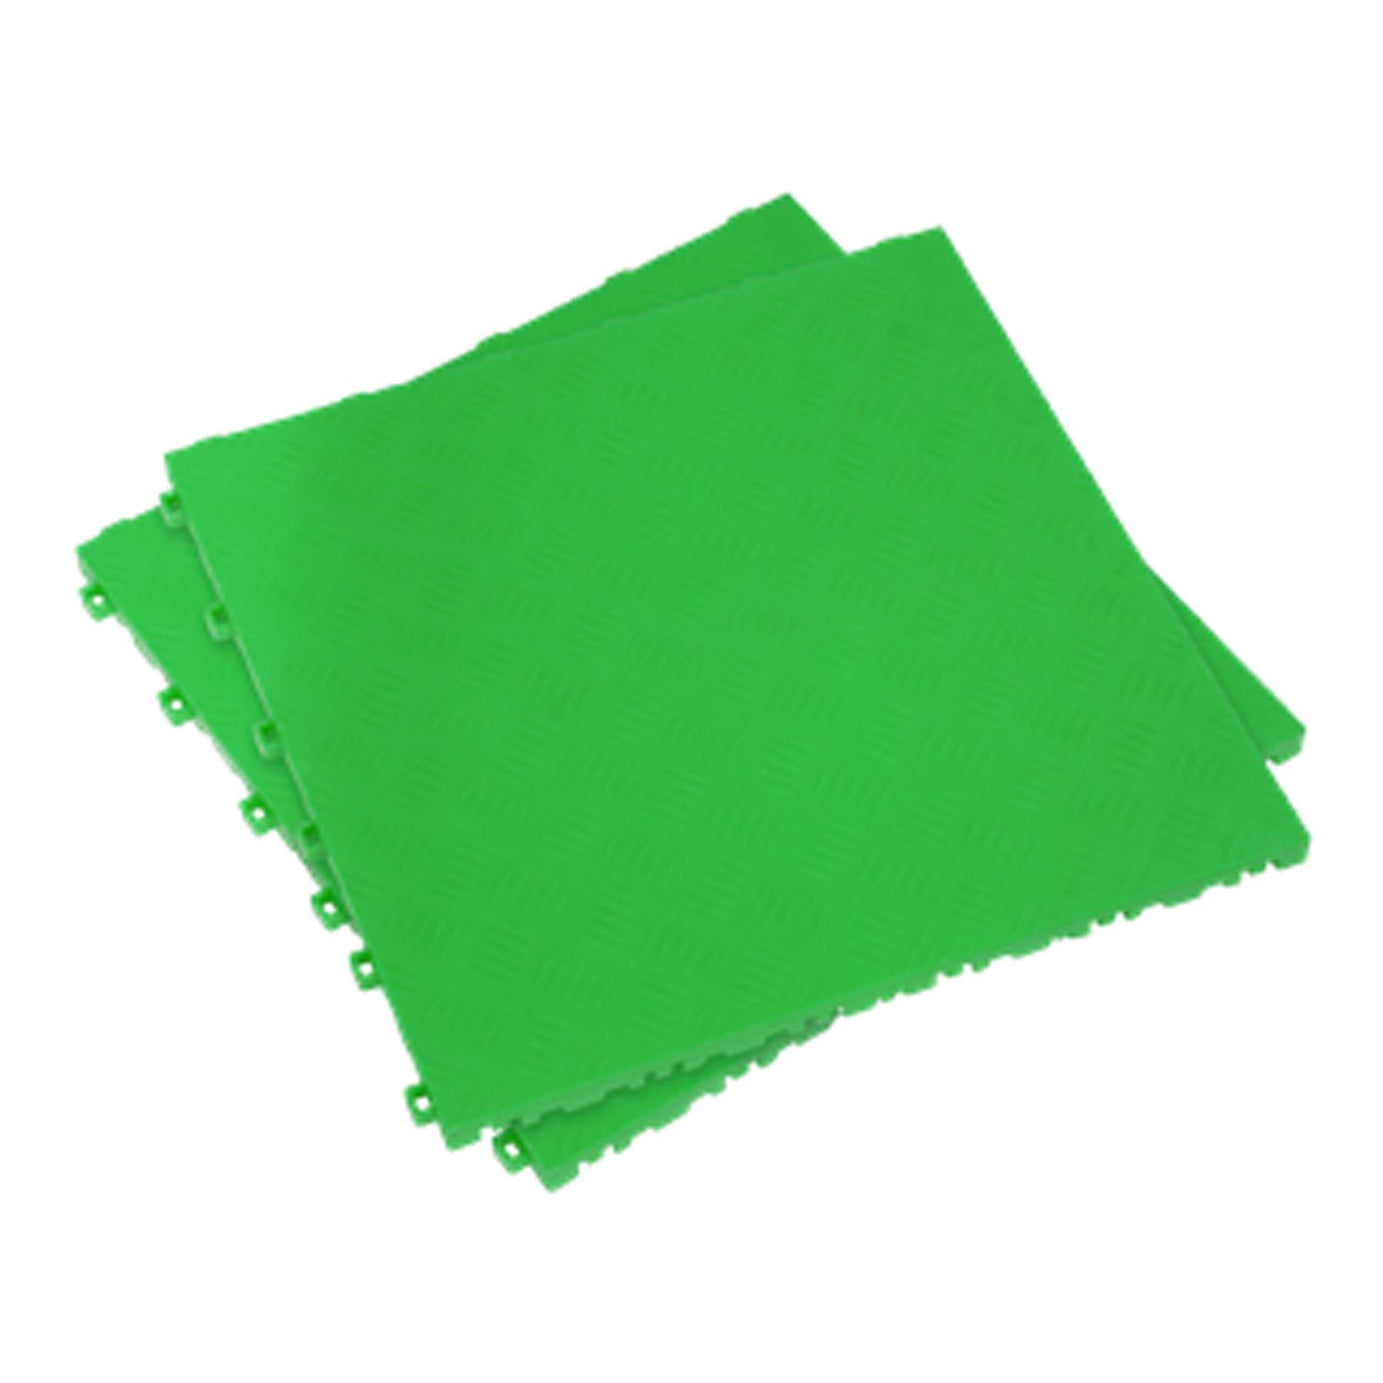 Sealey Polypropylene Floor Tile-Green Treadplate 400x400mm Pk of 9